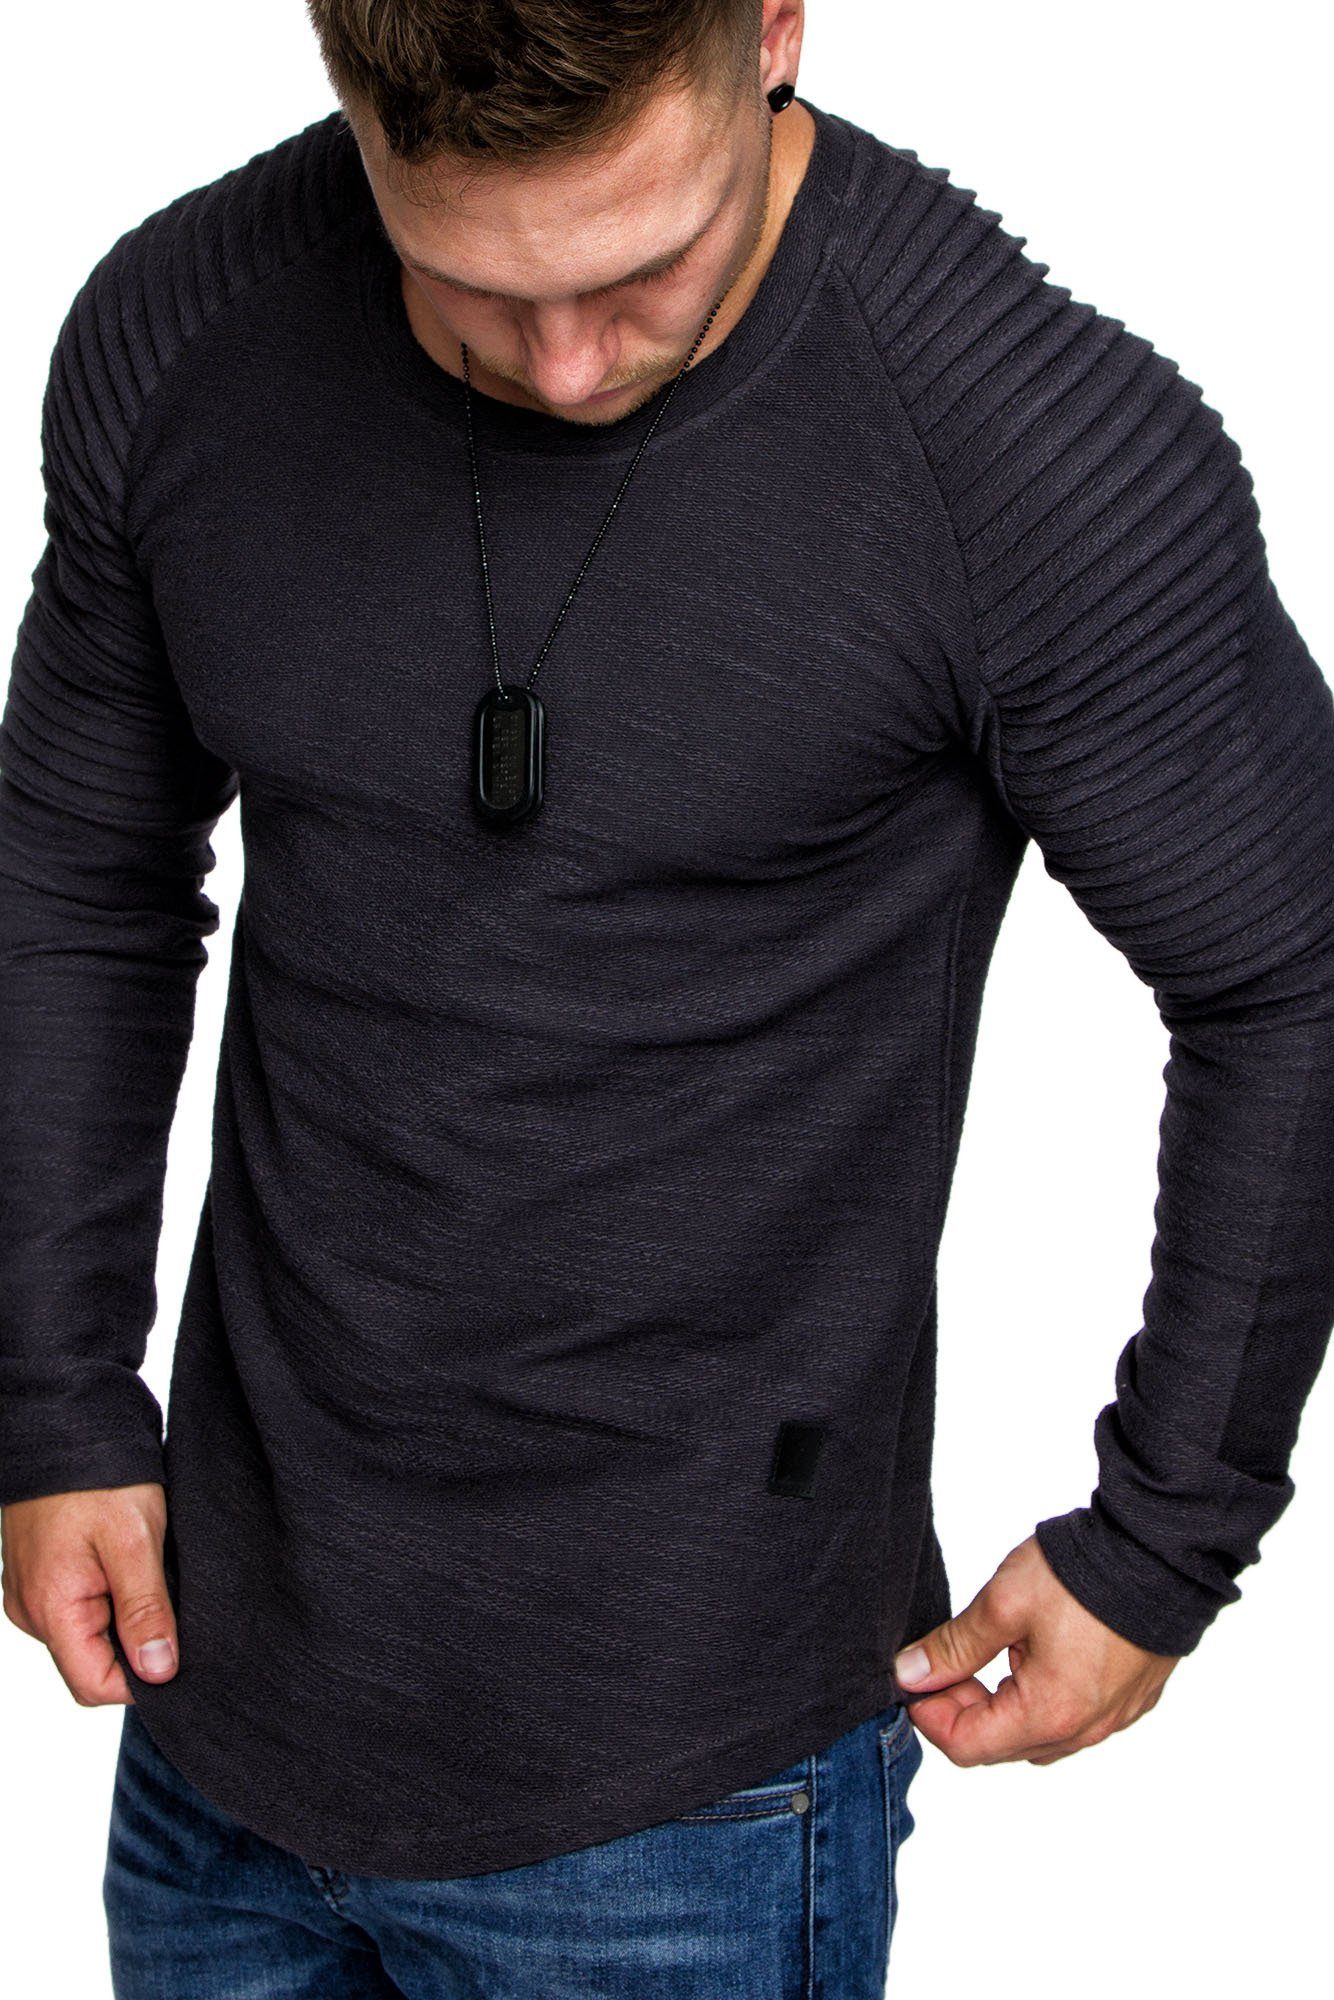 Amaci&Sons Sweatshirt Gresham Sweatshirt Herren Basic Kontrast Sweatjacke Pullover Hoodie Kapuzenpullover Anthrazit | Sweatshirts